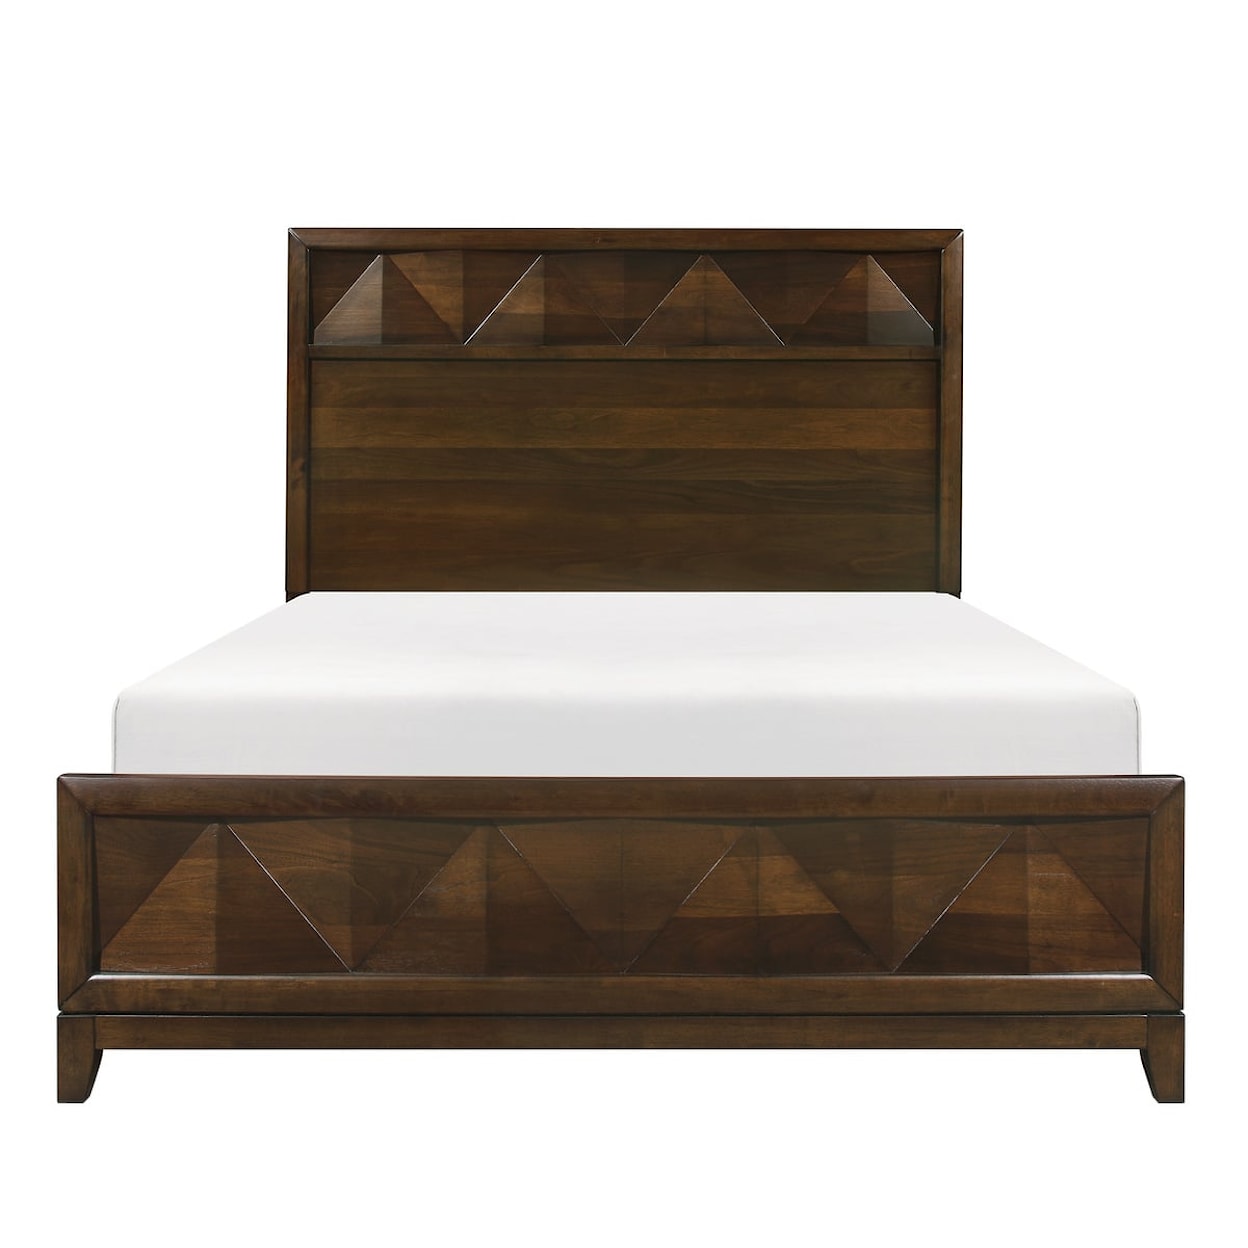 Homelegance Furniture Aziel California King Panel Bed